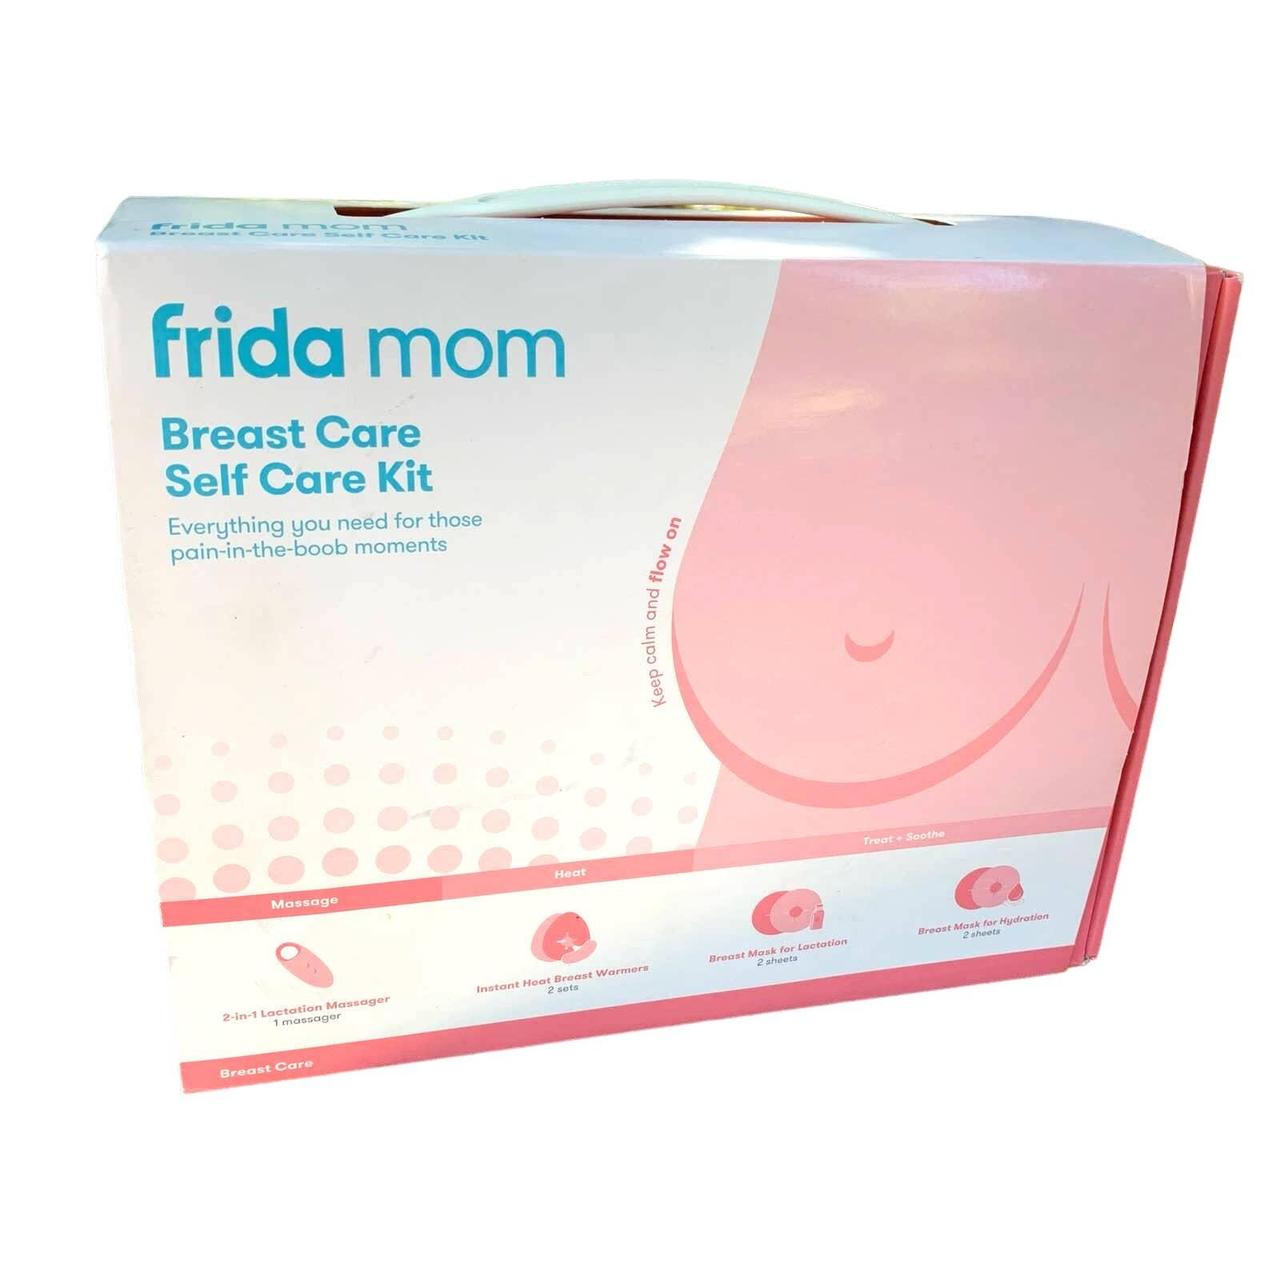 Frida Mom Instant Heat Breast Warmers